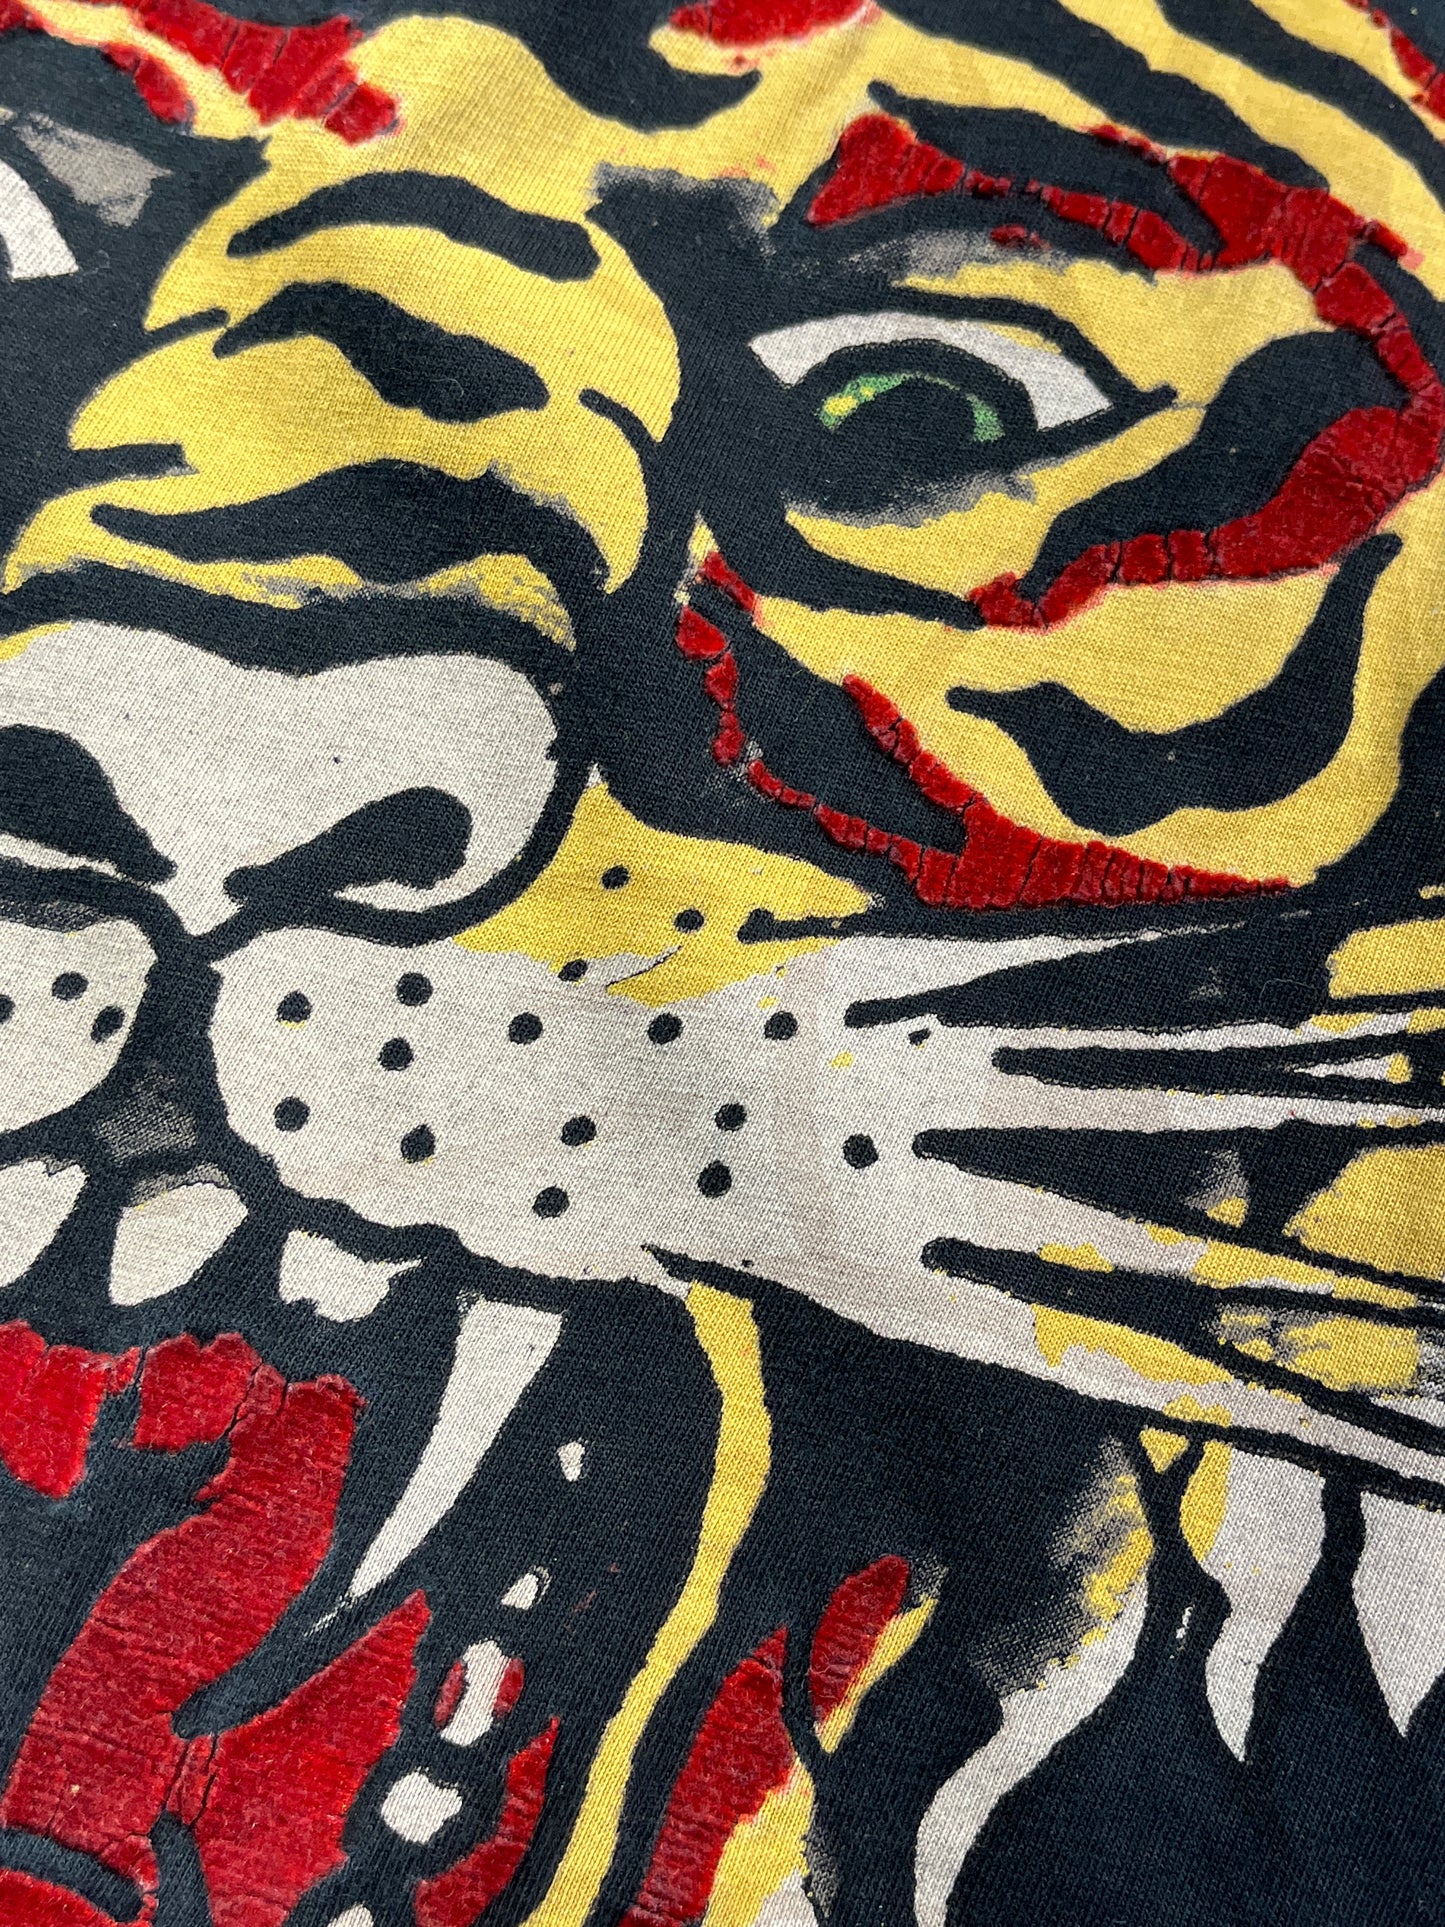 Vintage Ed Hardy T-Shirt Tiger Animal Tee Christian Audigier